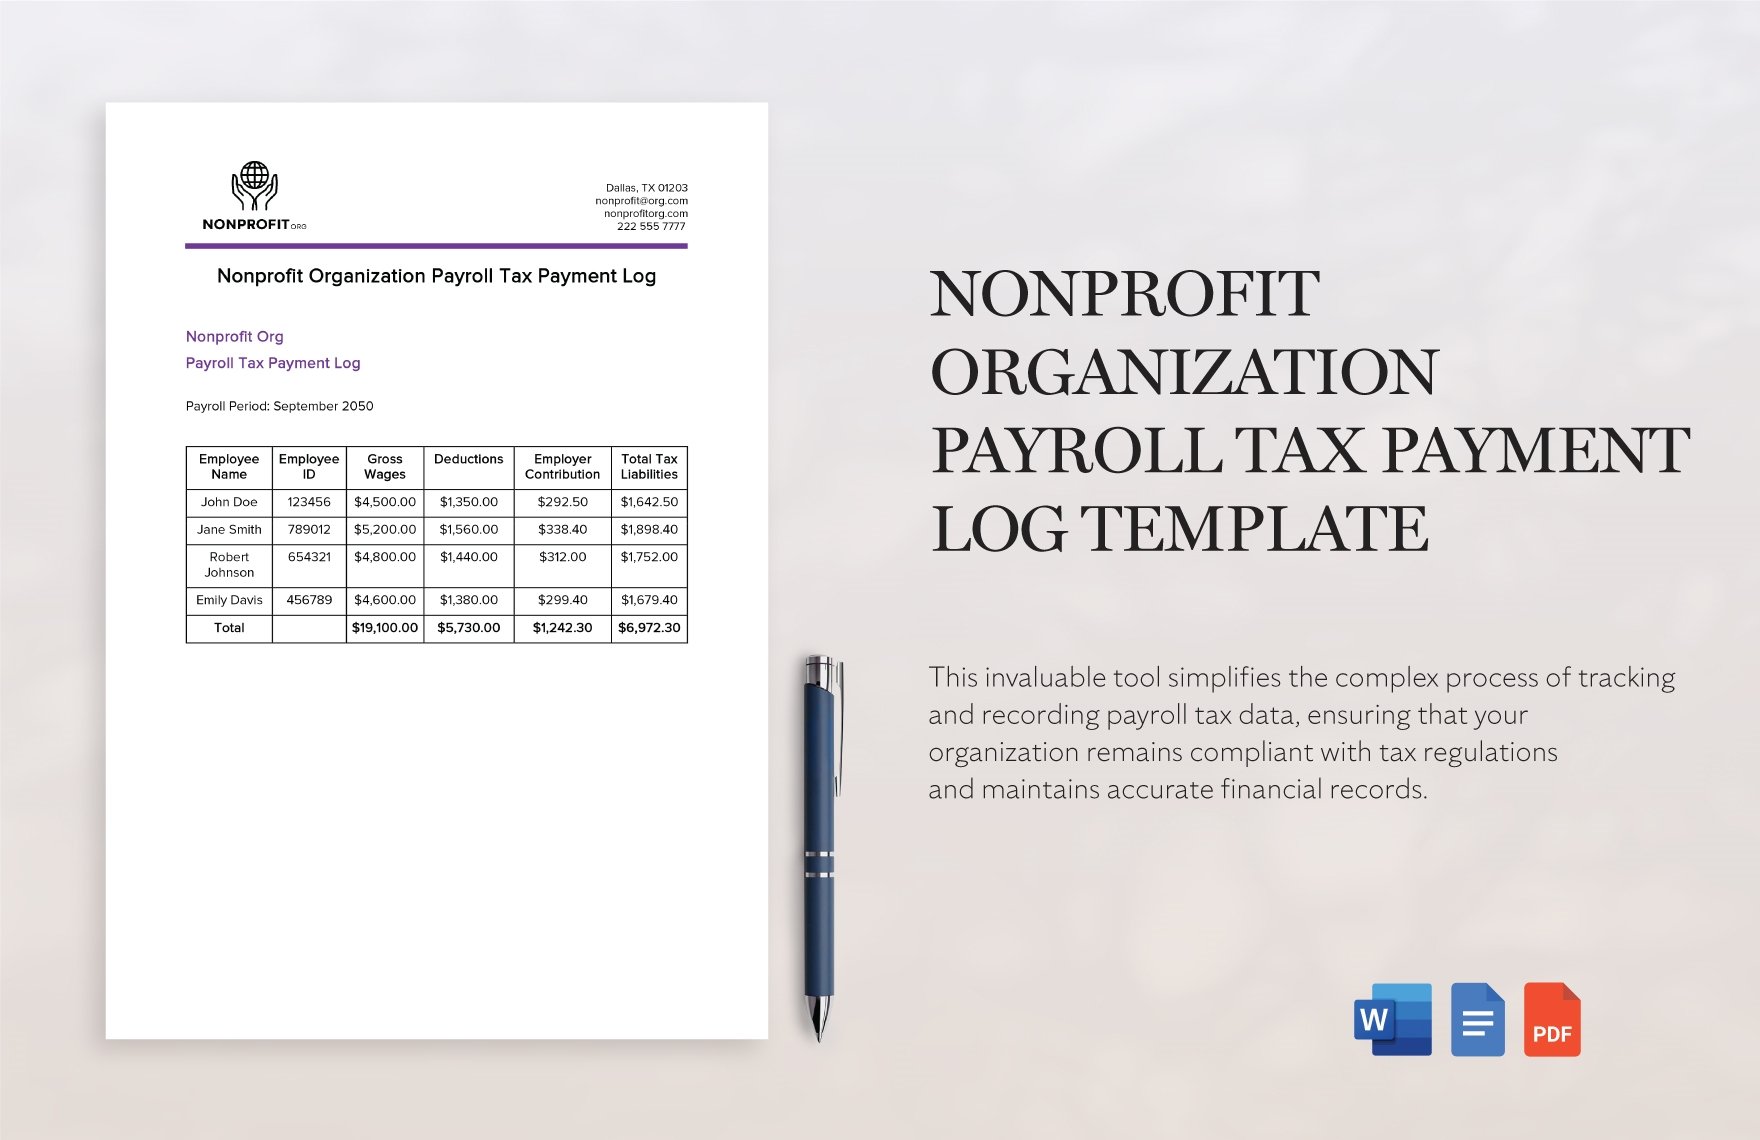 Nonprofit Organization Payroll Tax Payment Log Template